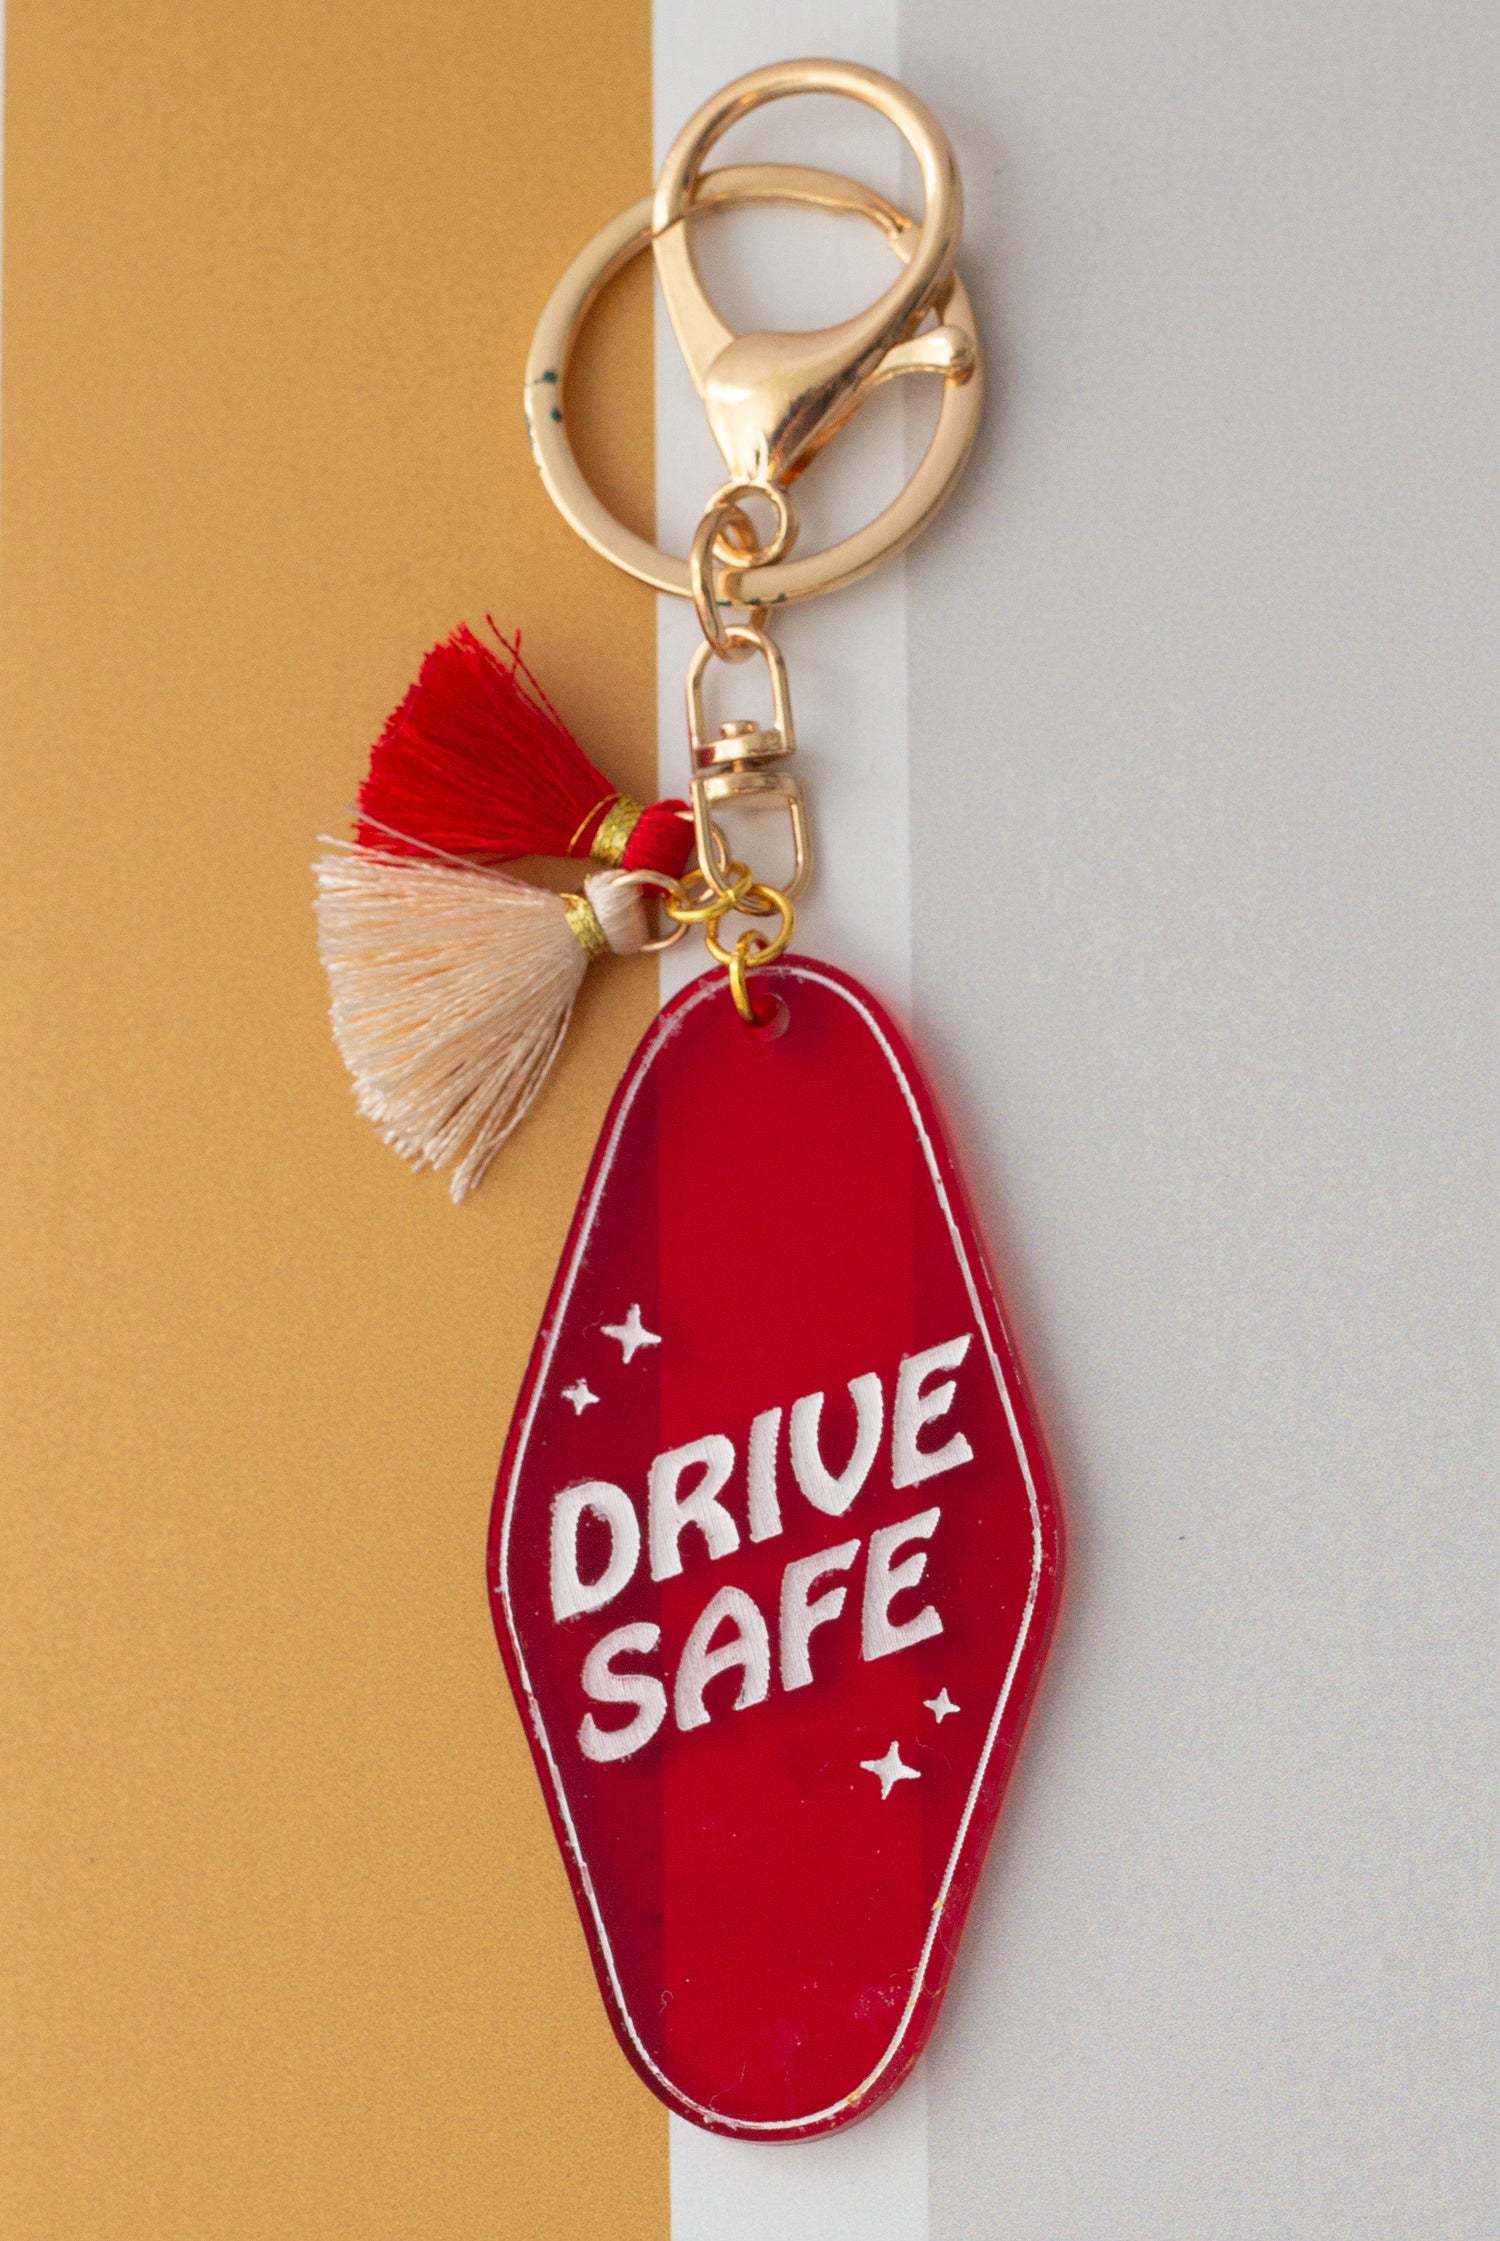 Drive Safe - Vintage Style Acrylic Keychain